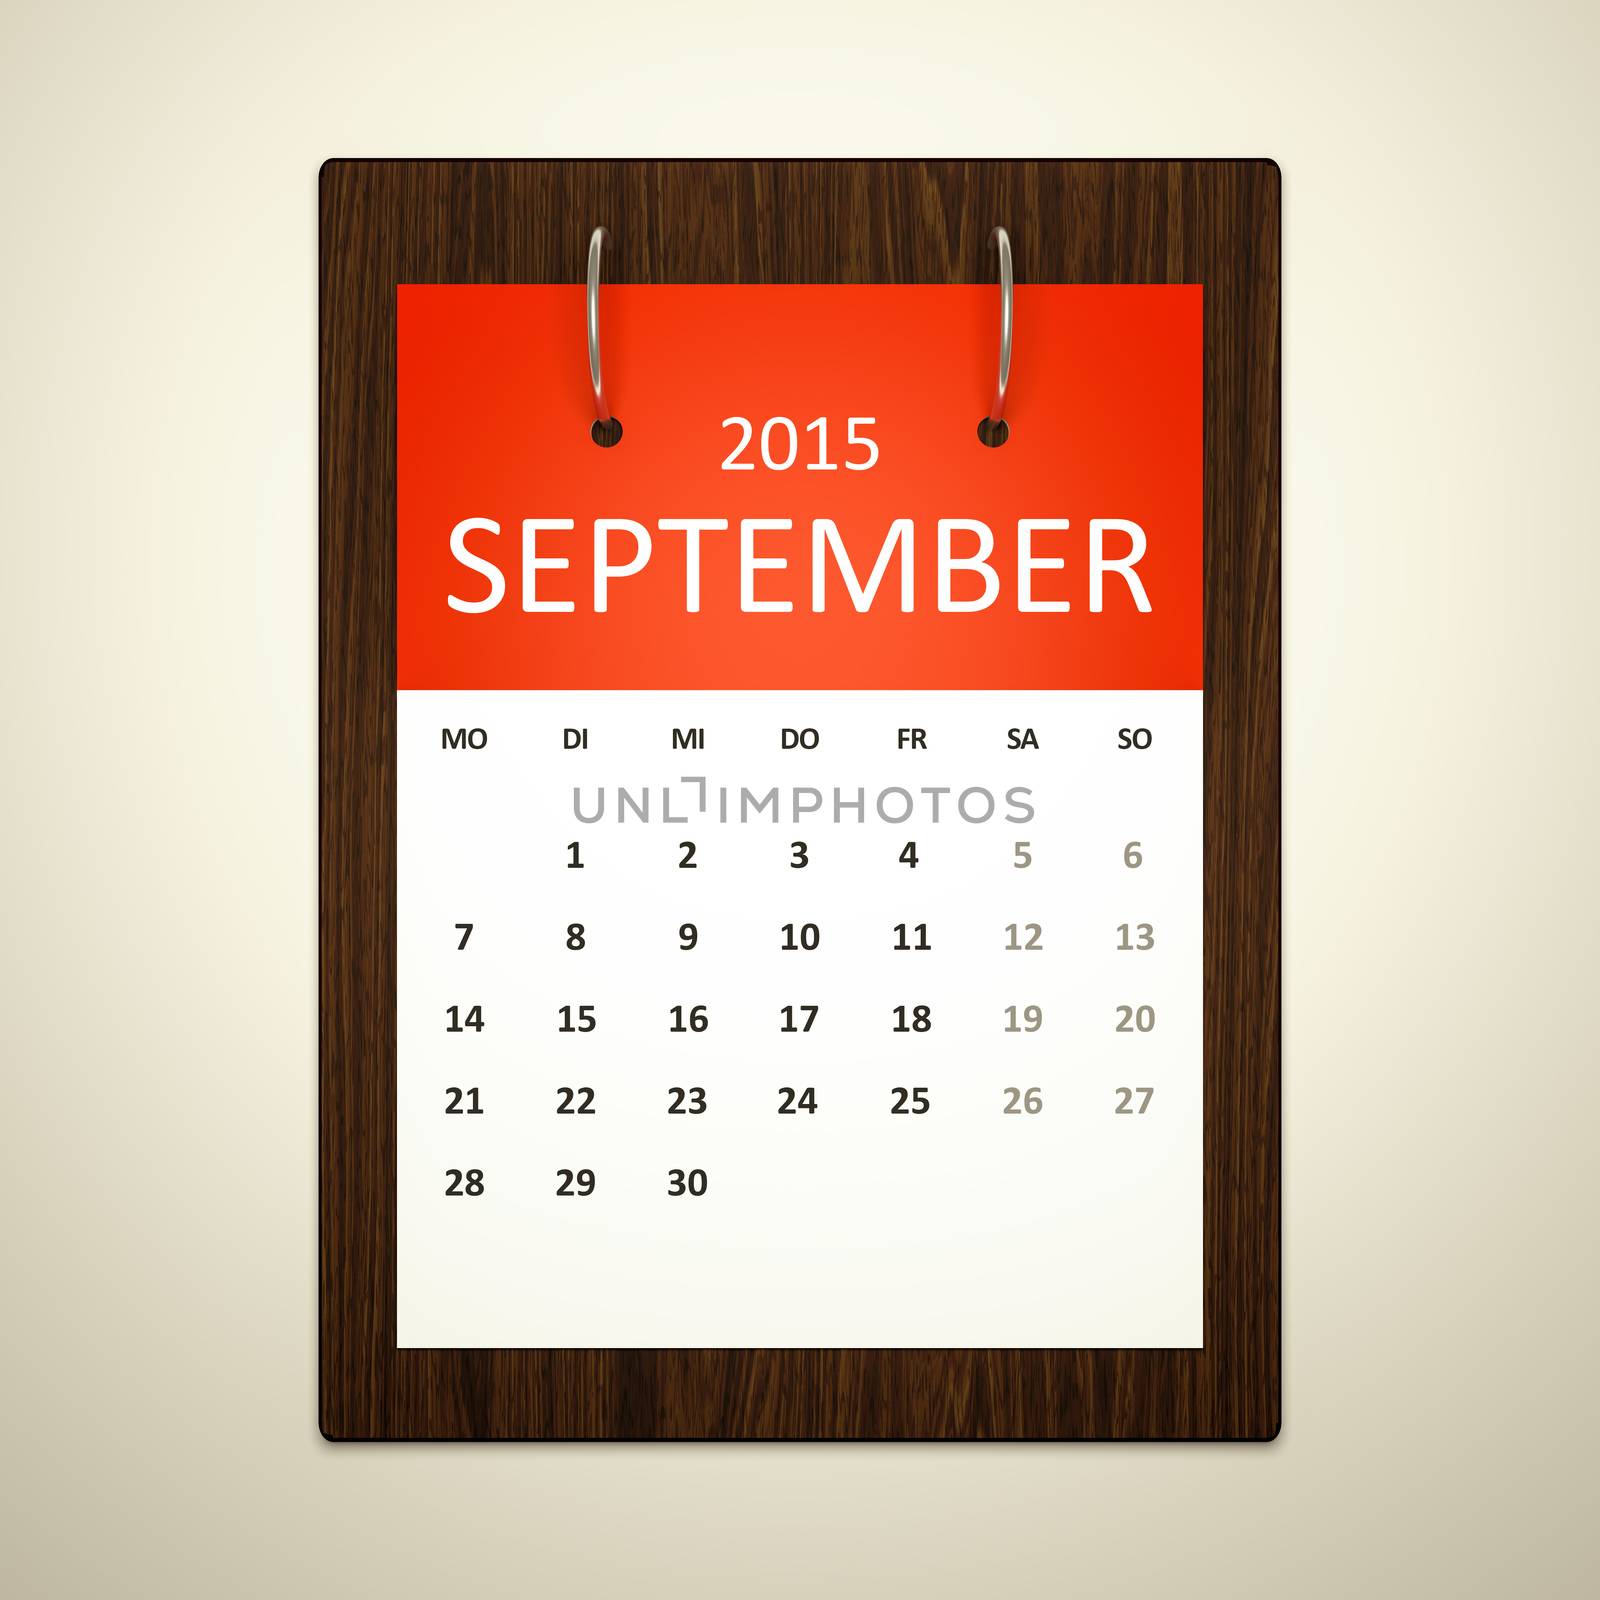 An image of a german calendar for event planning september 2015